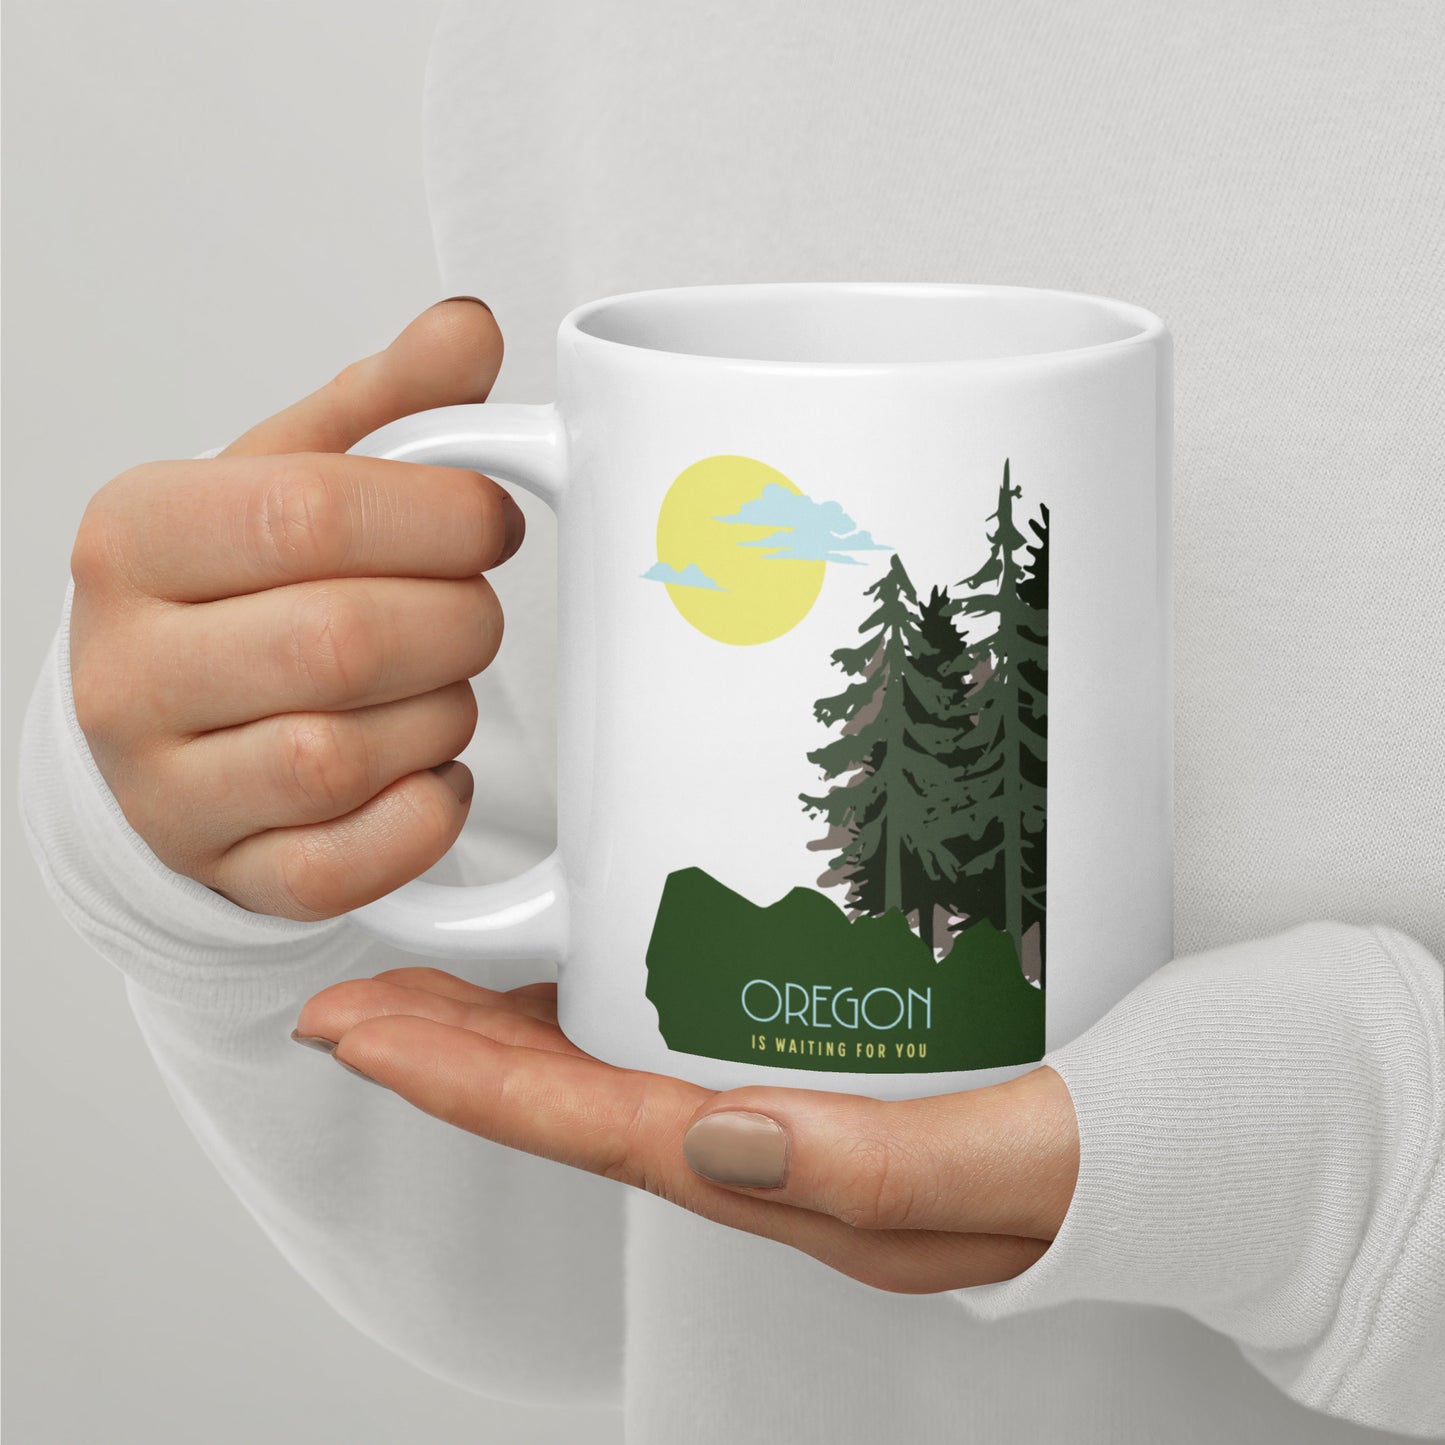 Oregon is Waiting For You - White glossy mug